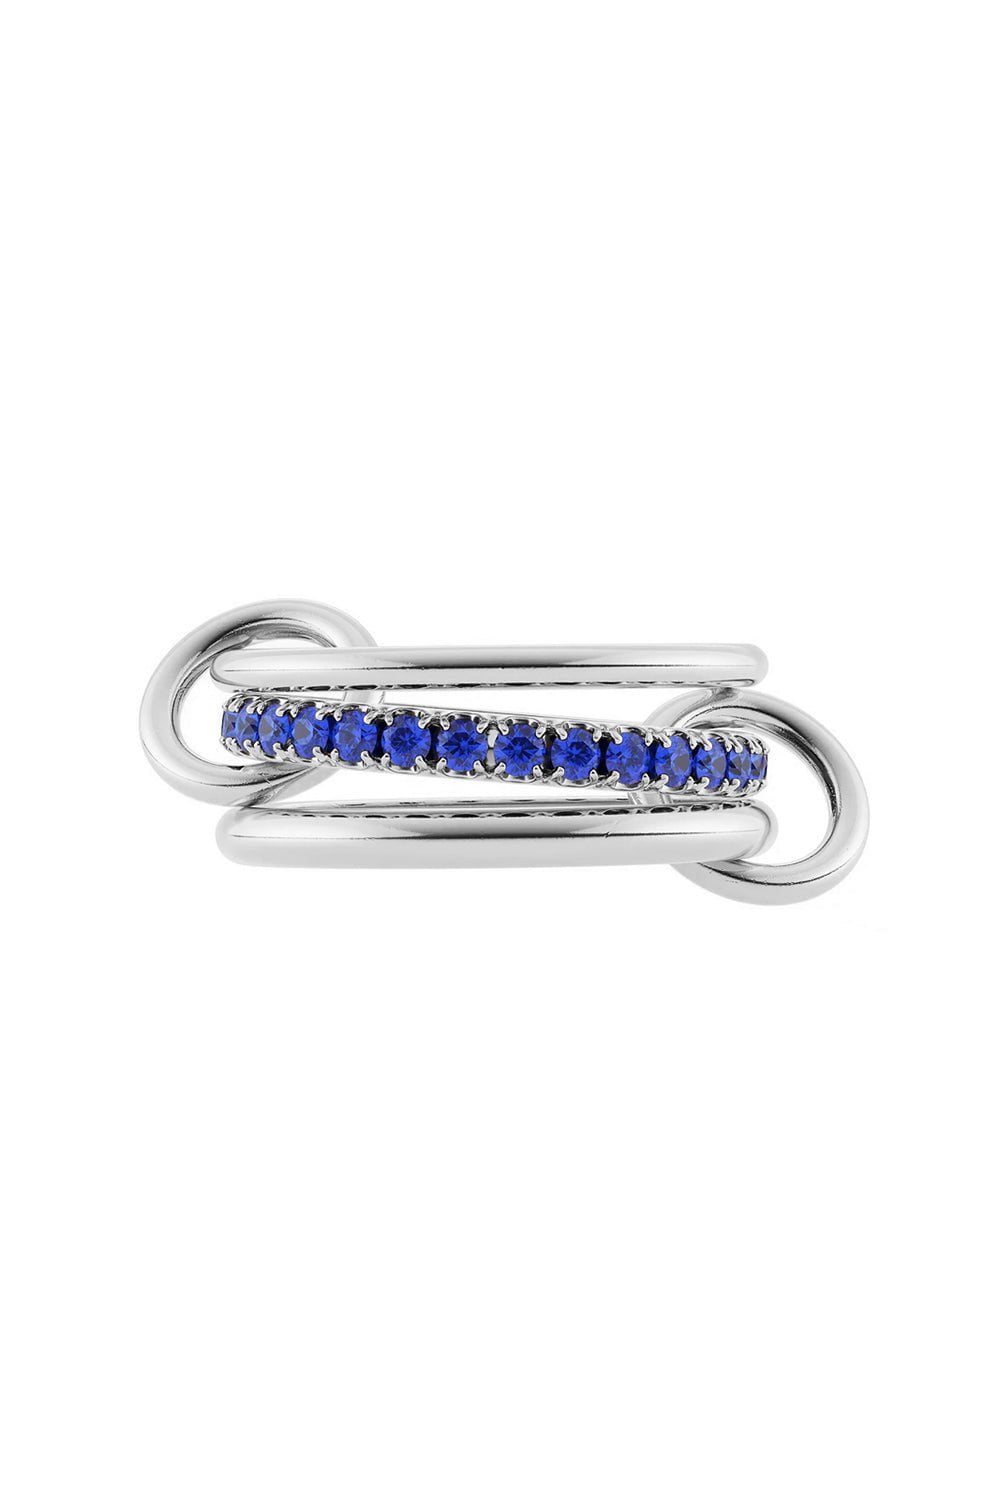 SPINELLI KILCOLLIN-Petunia Bleu Three Link Ring-